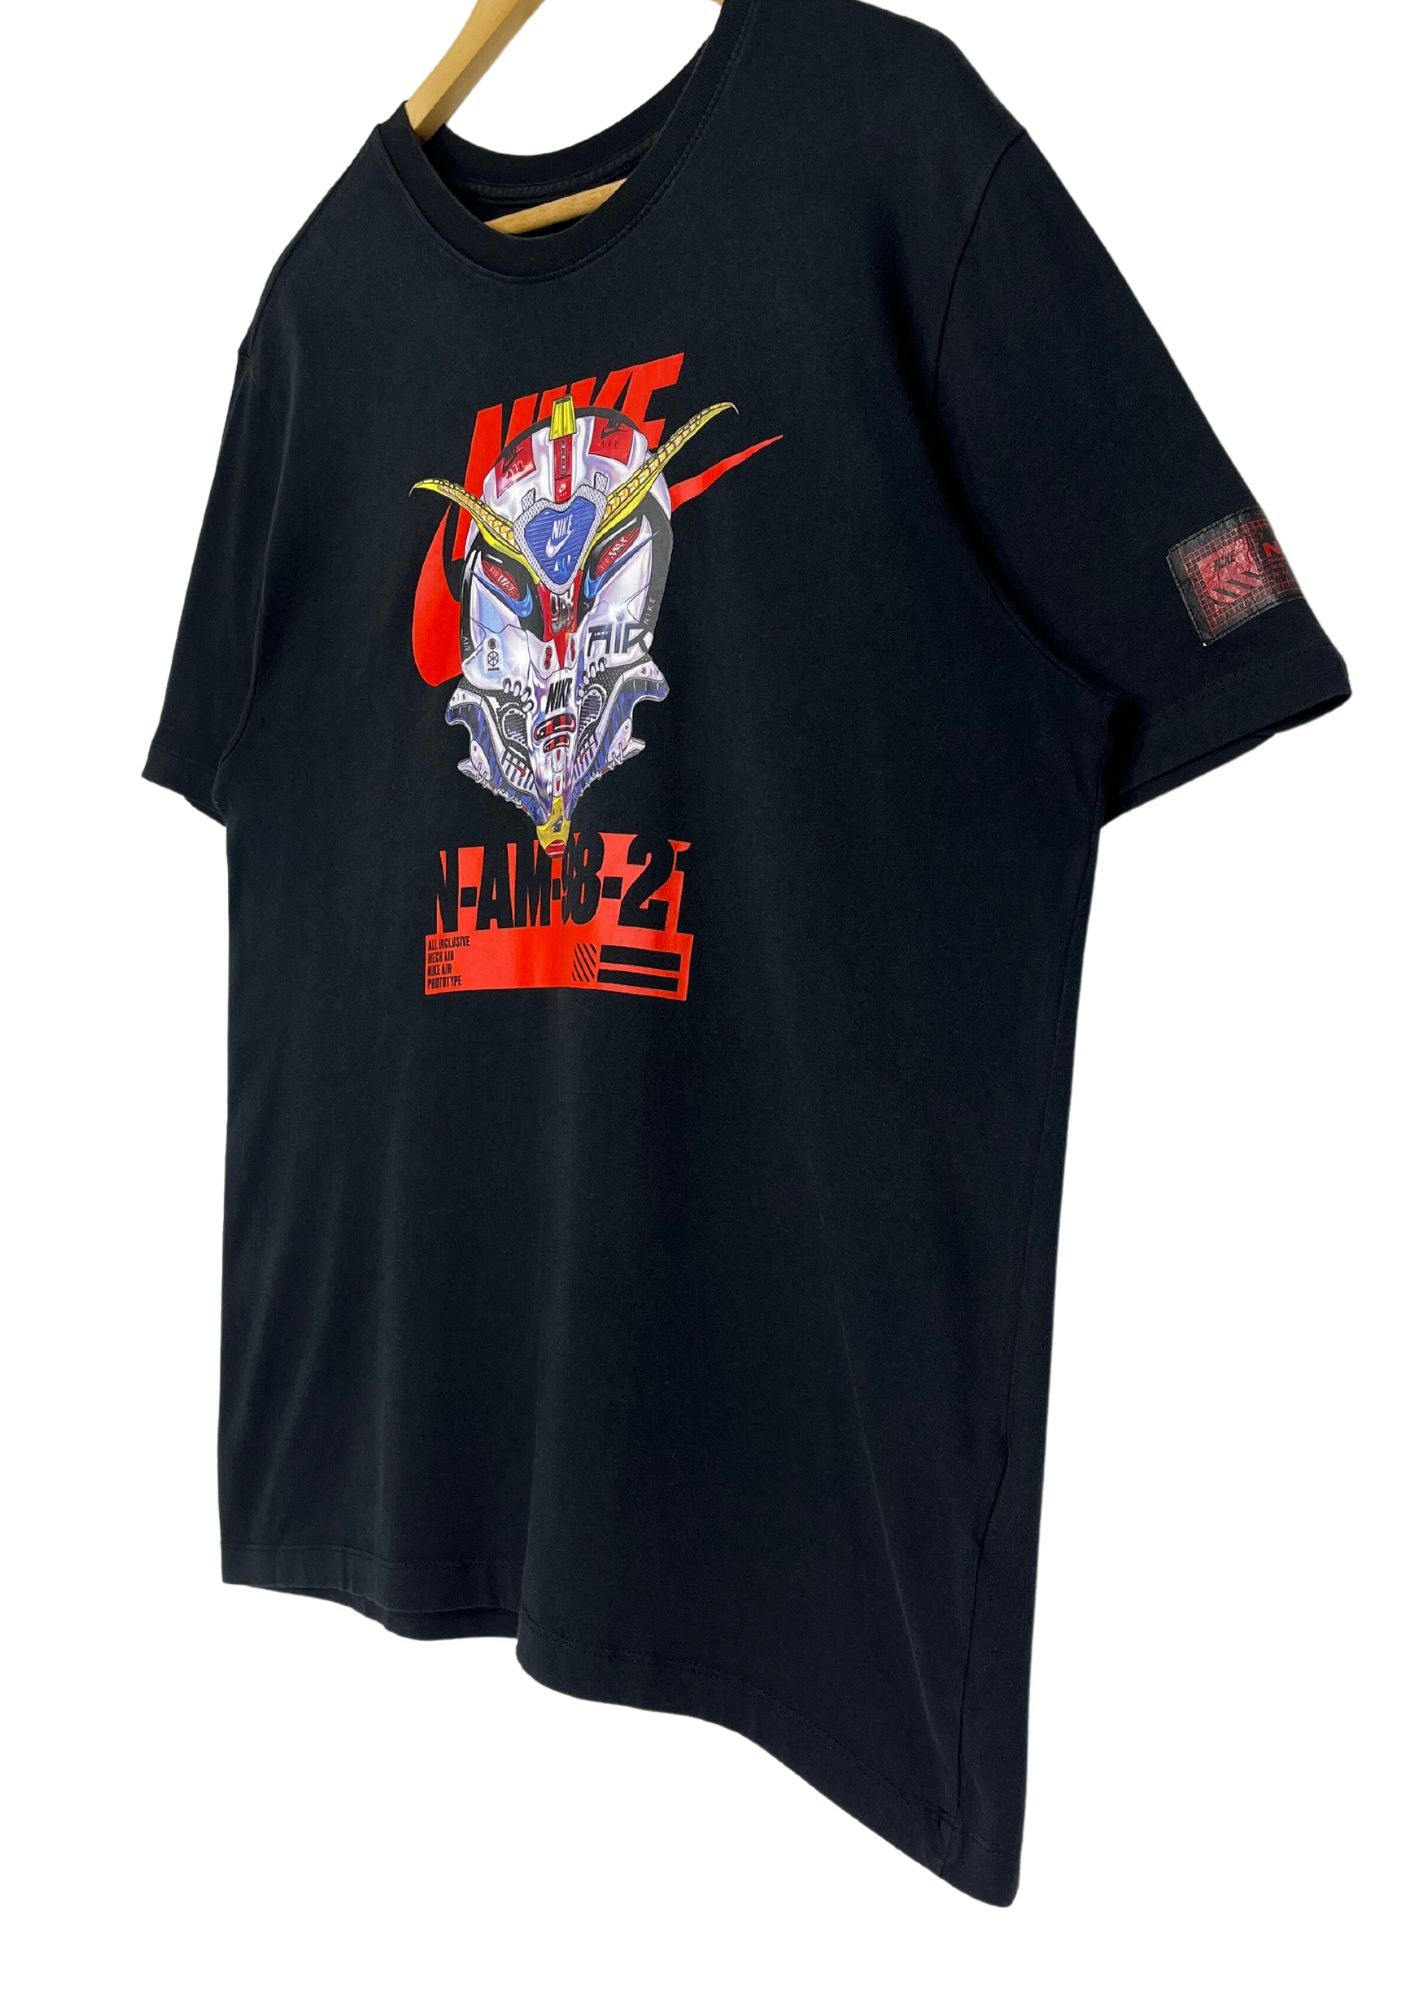 Mobile Suit Gundam x Nike Air Gundam Face T-shirt